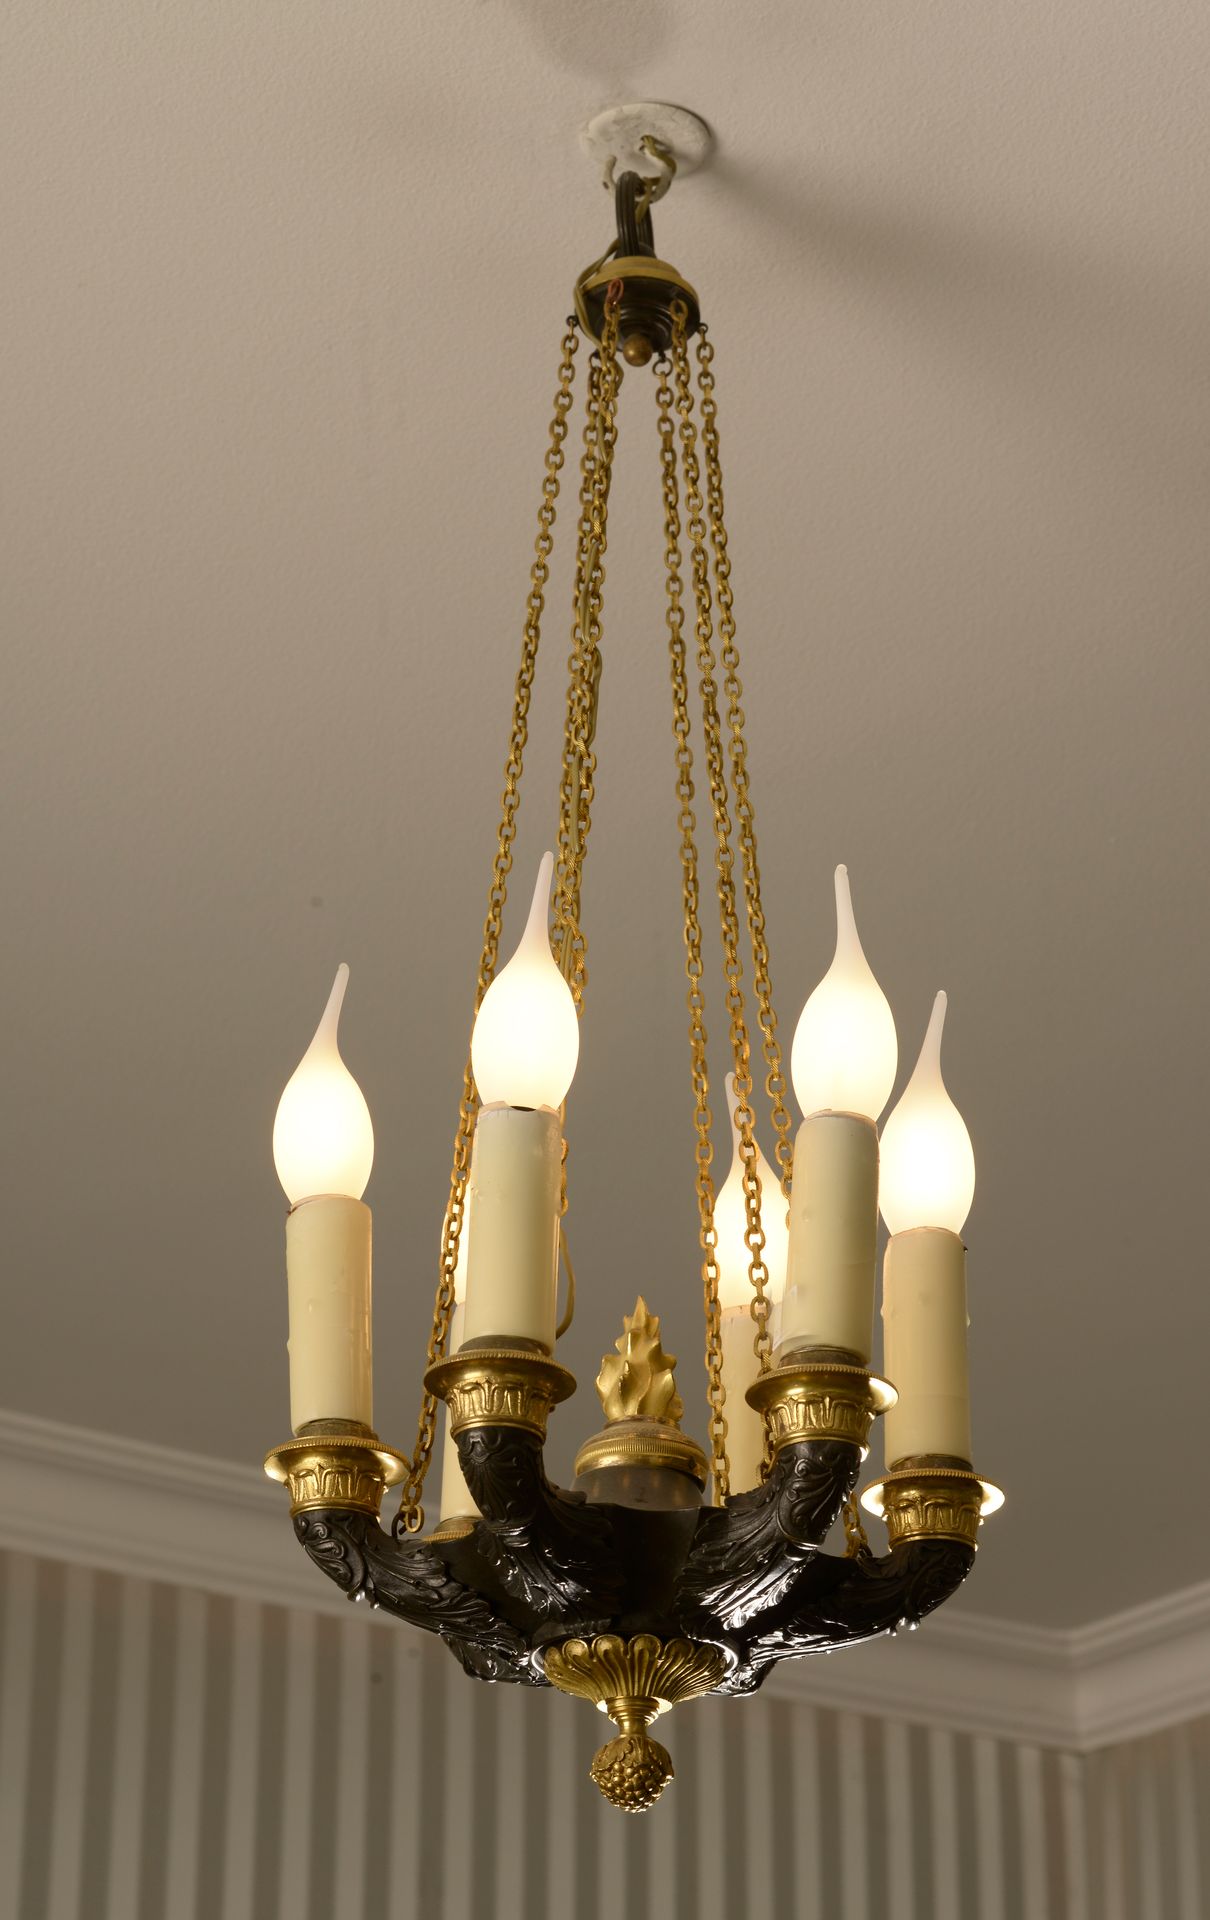 Null 一盏小型的黑色铜质吊灯，有六盏灯，装饰有刺桐叶和棕榈花，围绕着中央的火。
帝国时期。
高度：64厘米64厘米 - 直径：25厘米